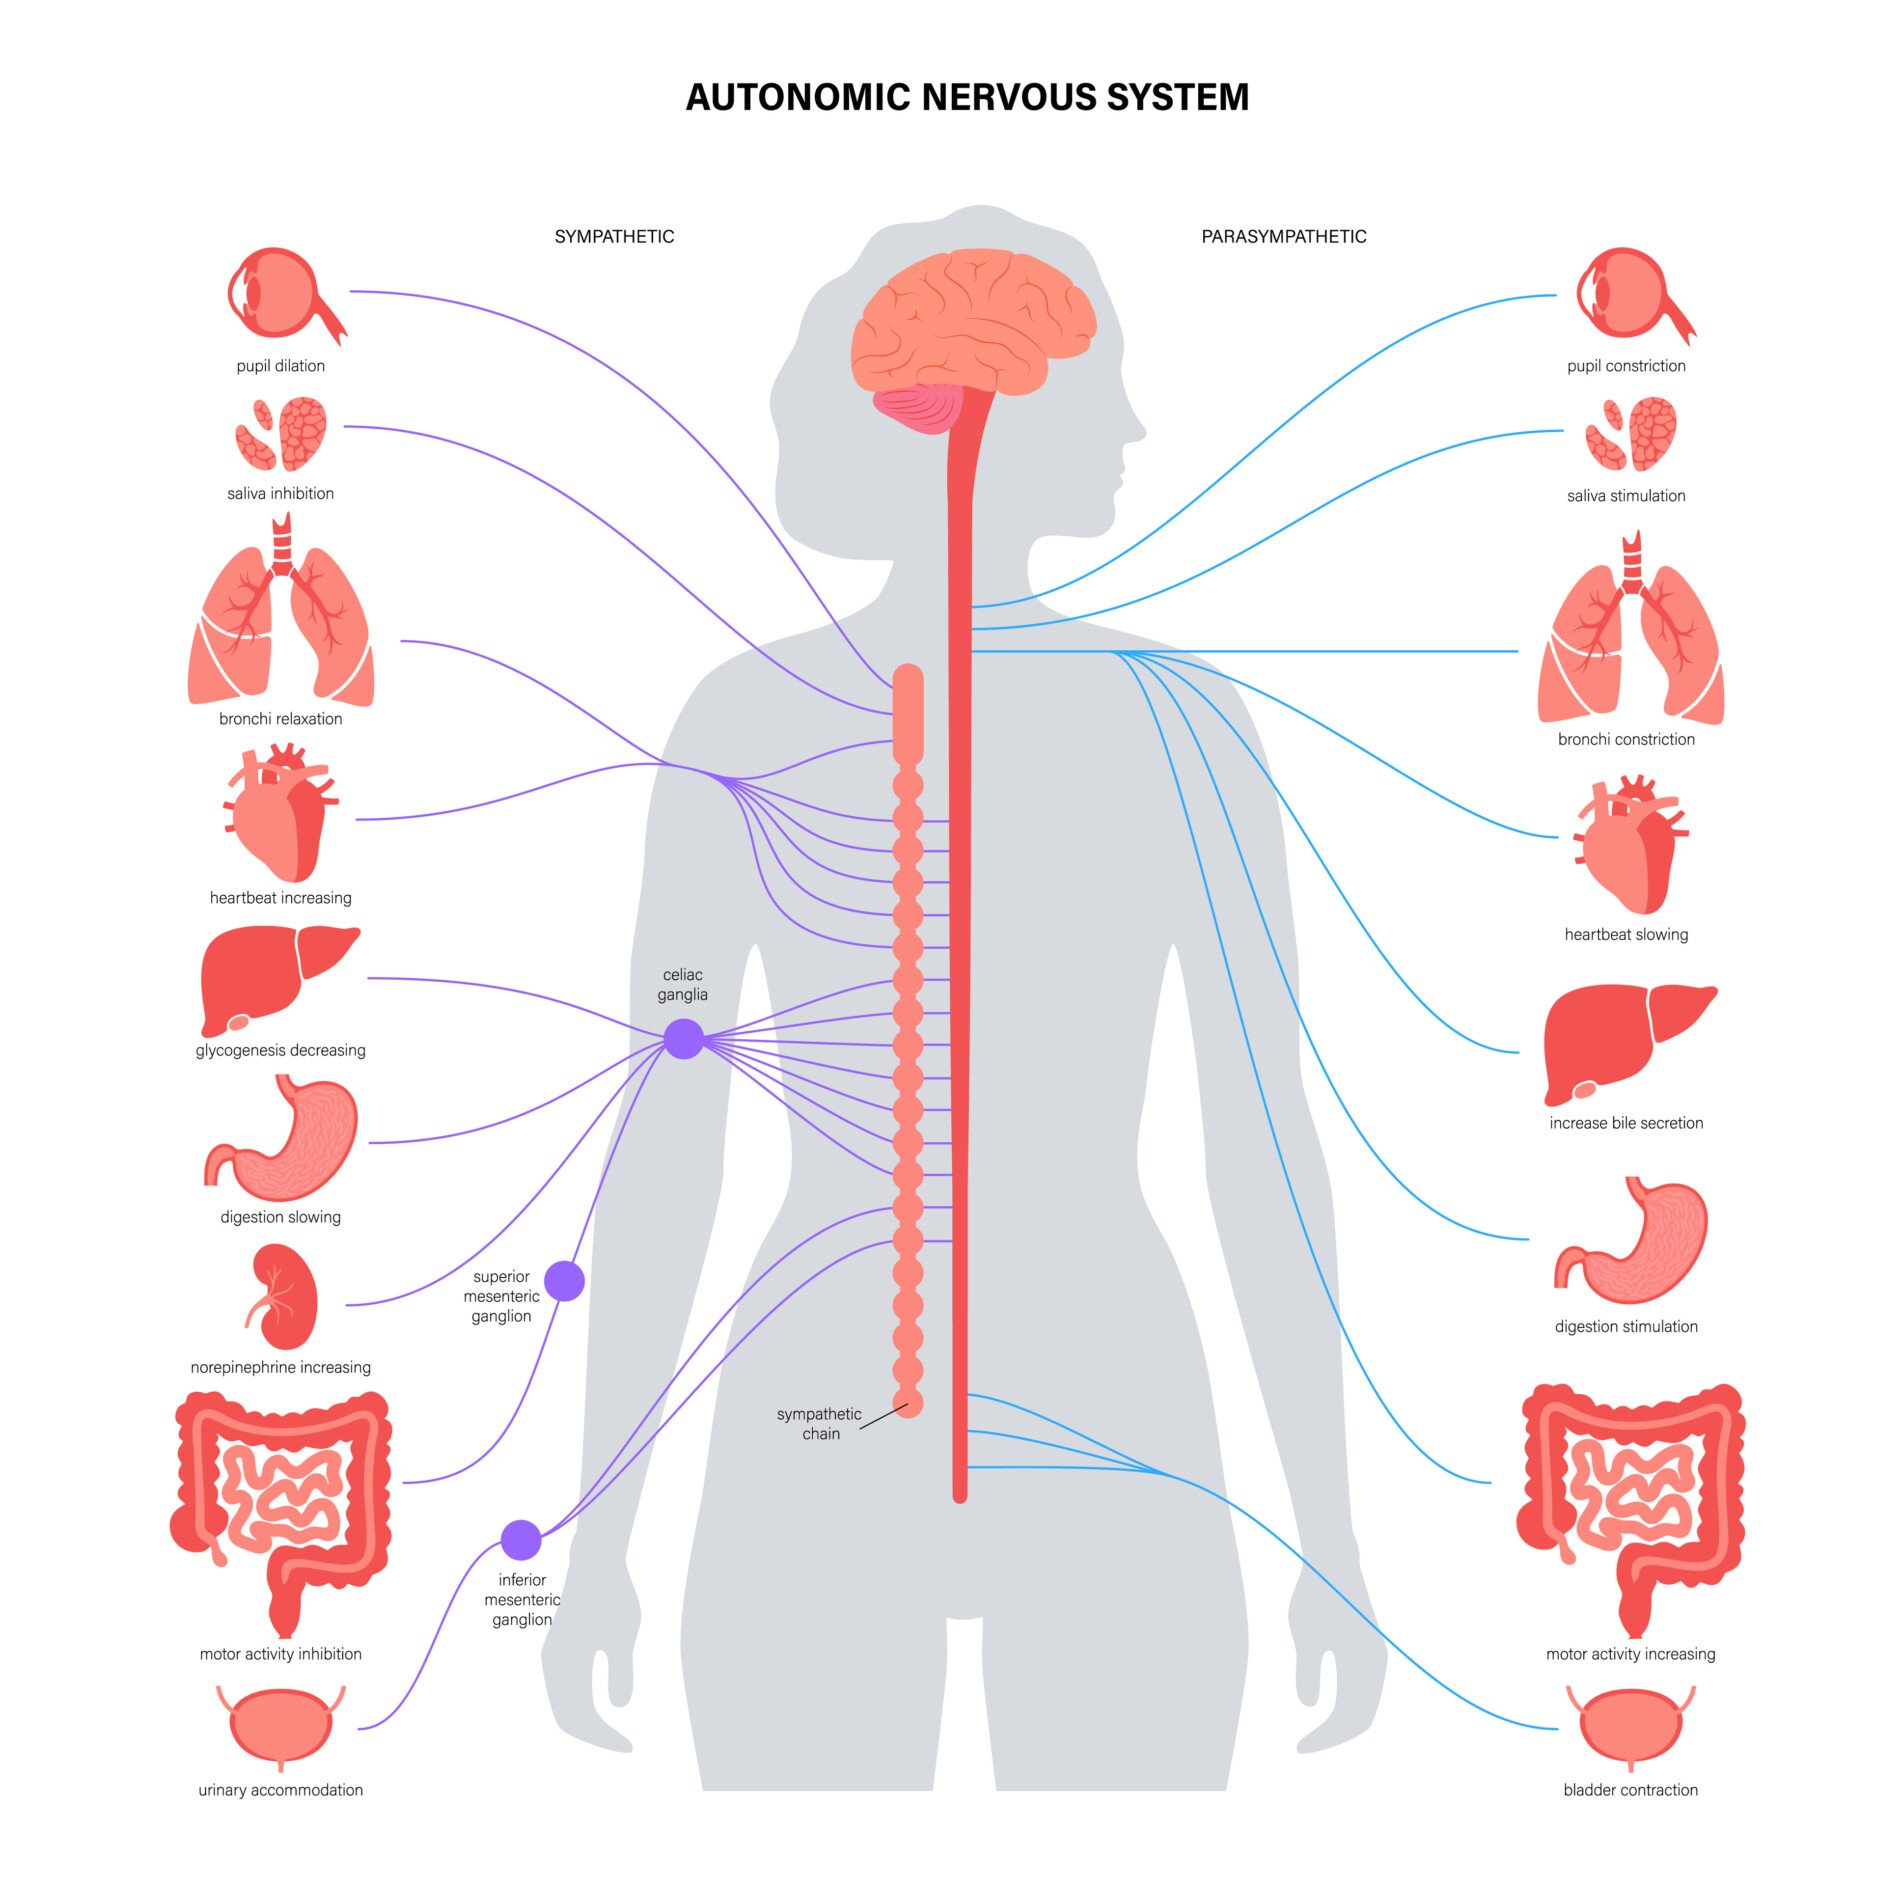 Sympathetic and parasympathetic nervous systems. Diagram of brain and nerves connection. Autonomic nervous system infographic poster.